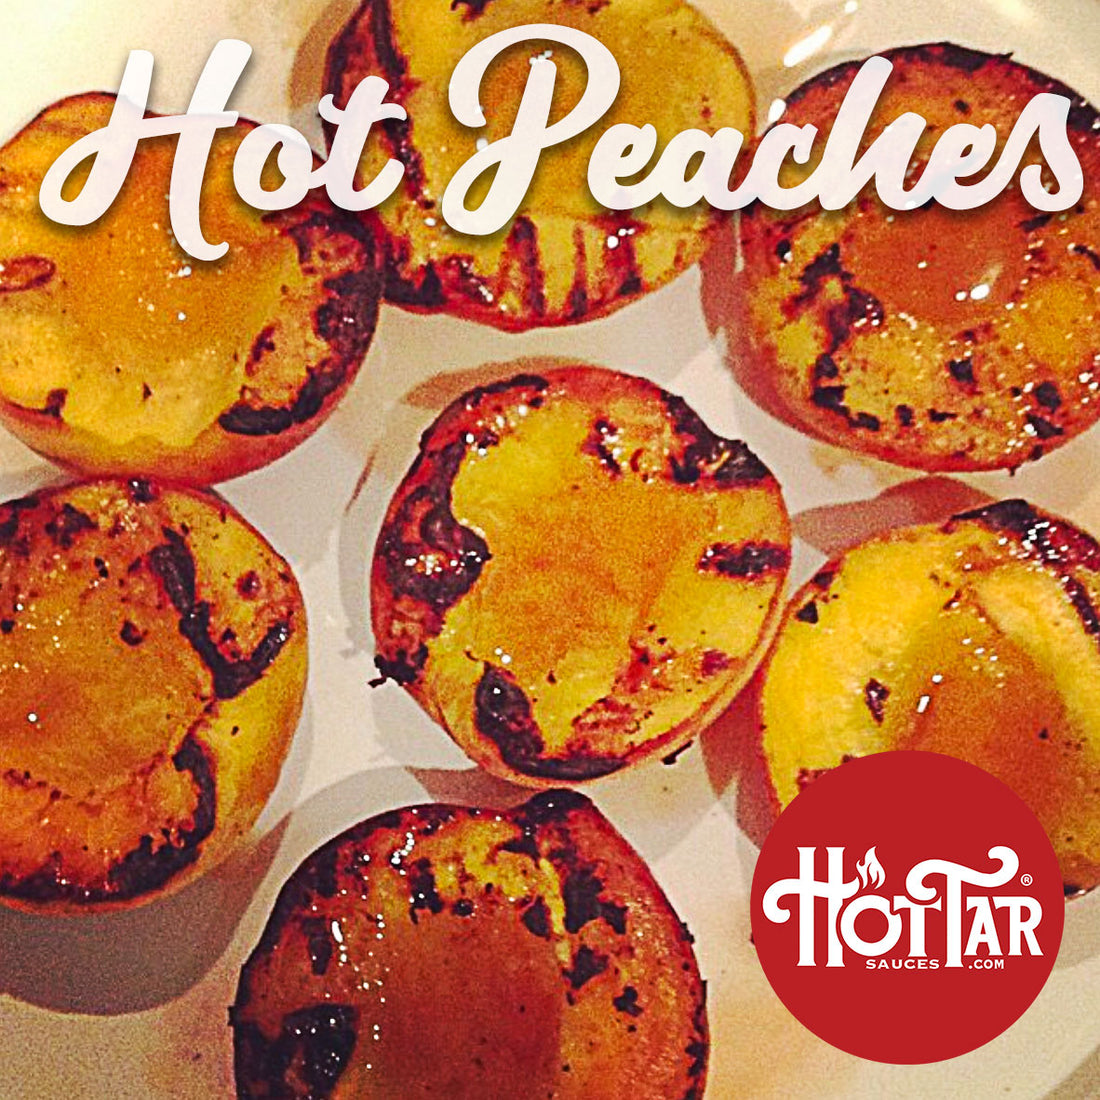 HOT TAR Hot Georgia Peaches Recipe